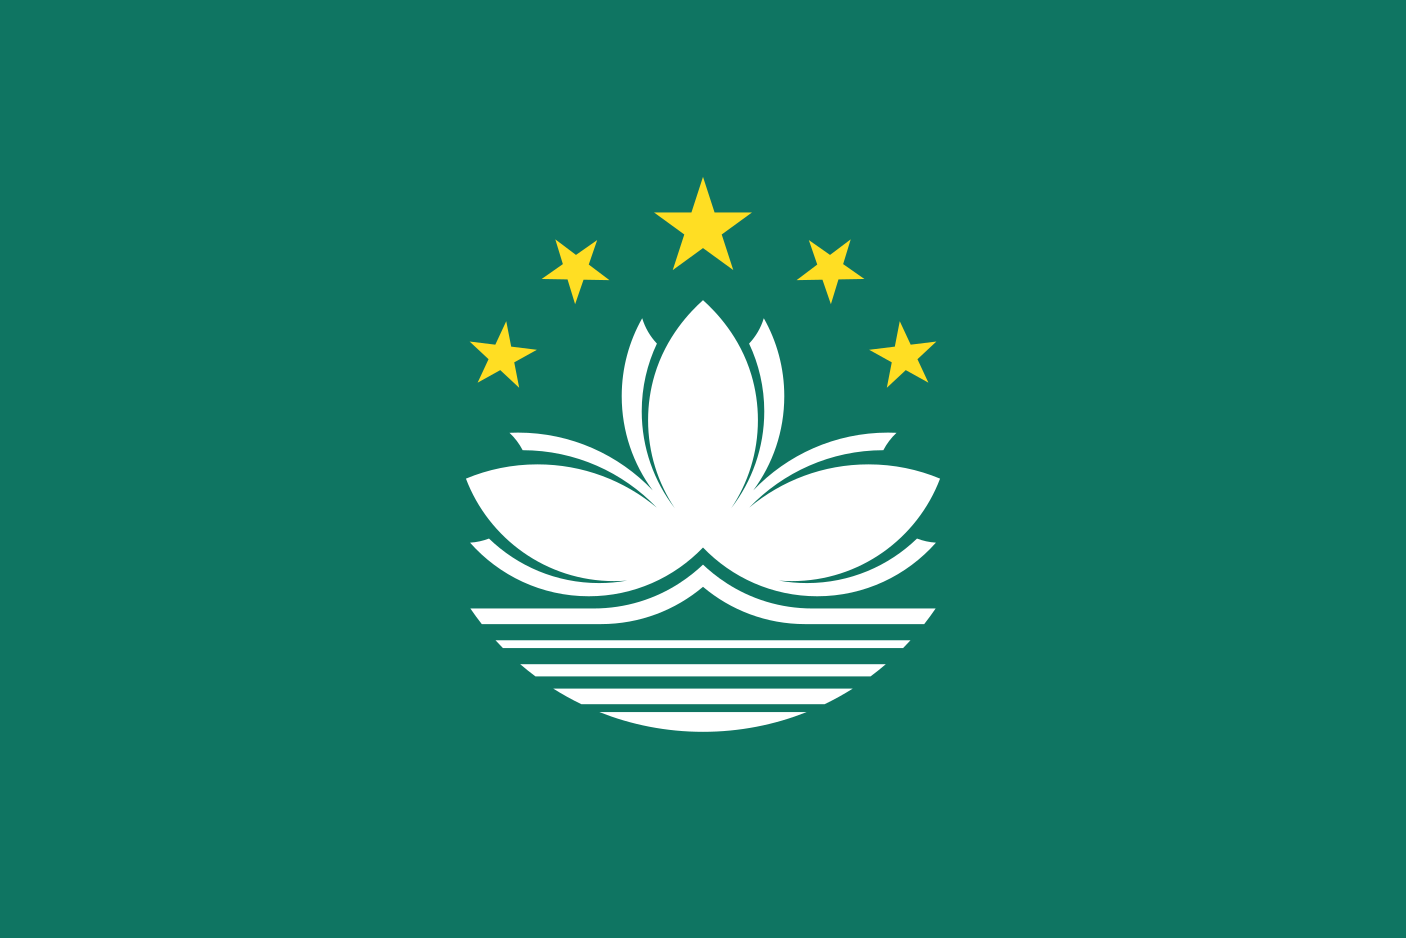 Macau Flag Vector - Free Download